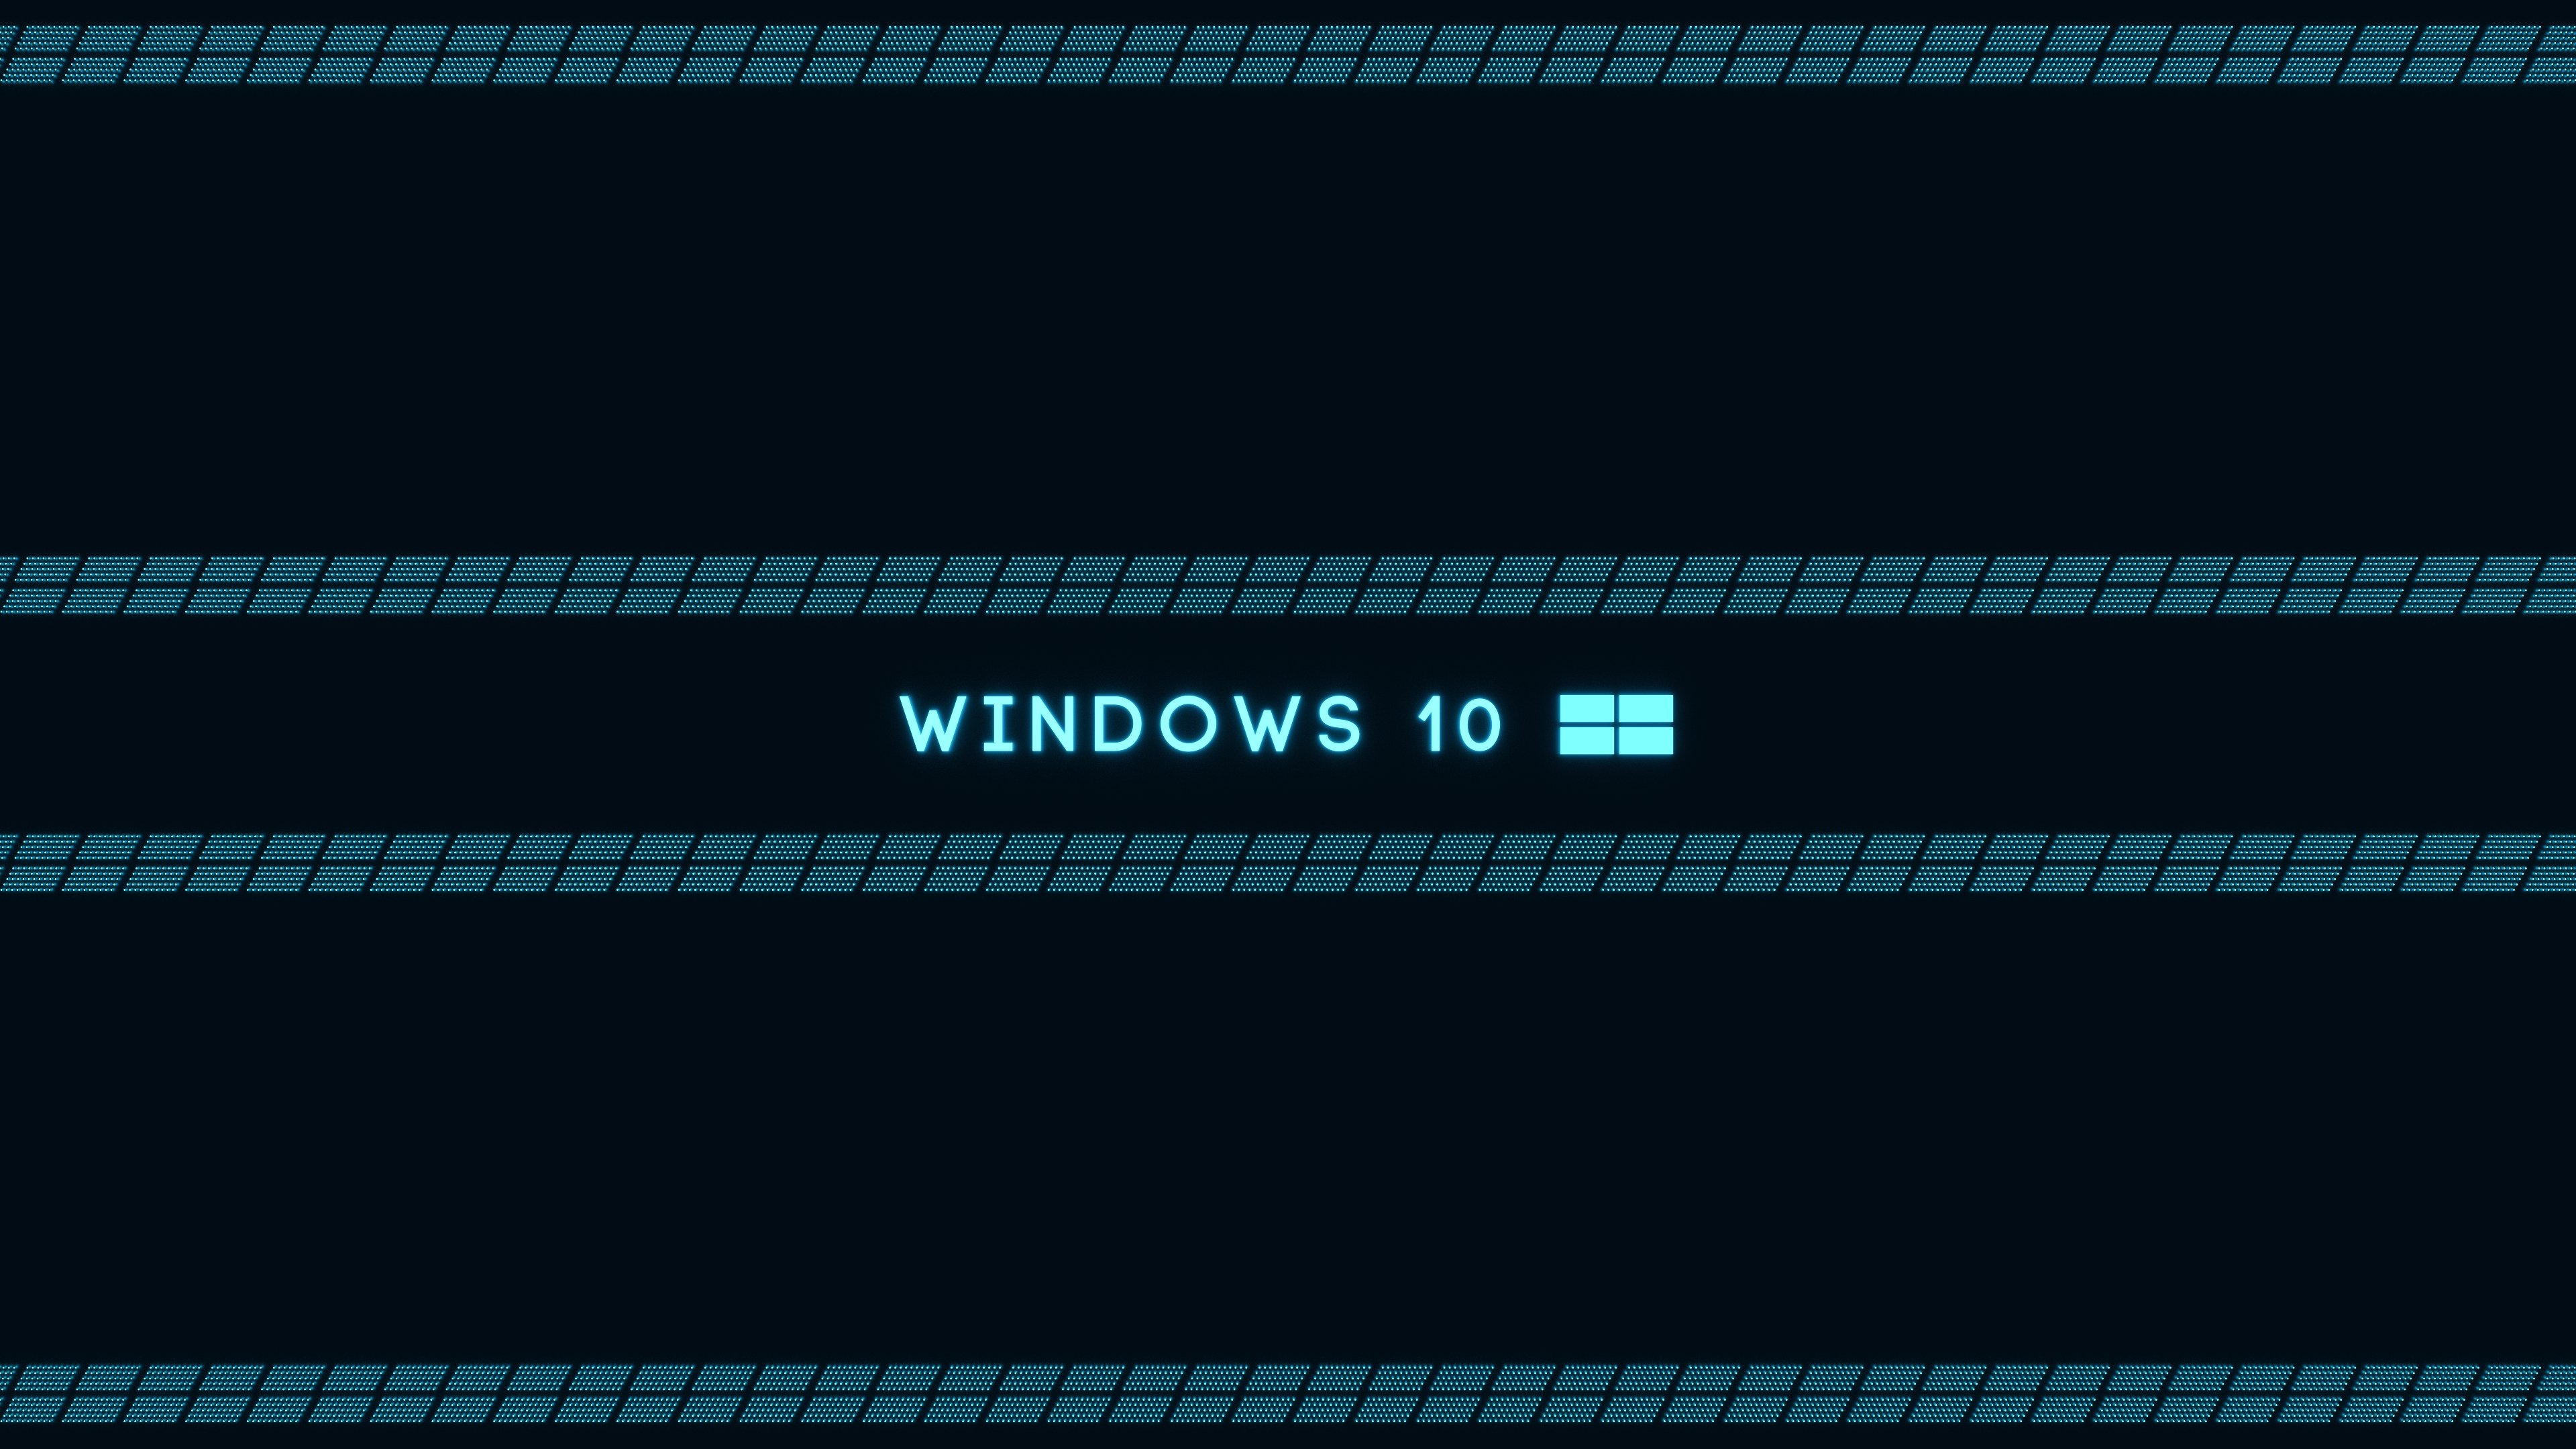 WINDOWS 10 microsoft computer wallpaper | 2560x1600 | 676052 ...